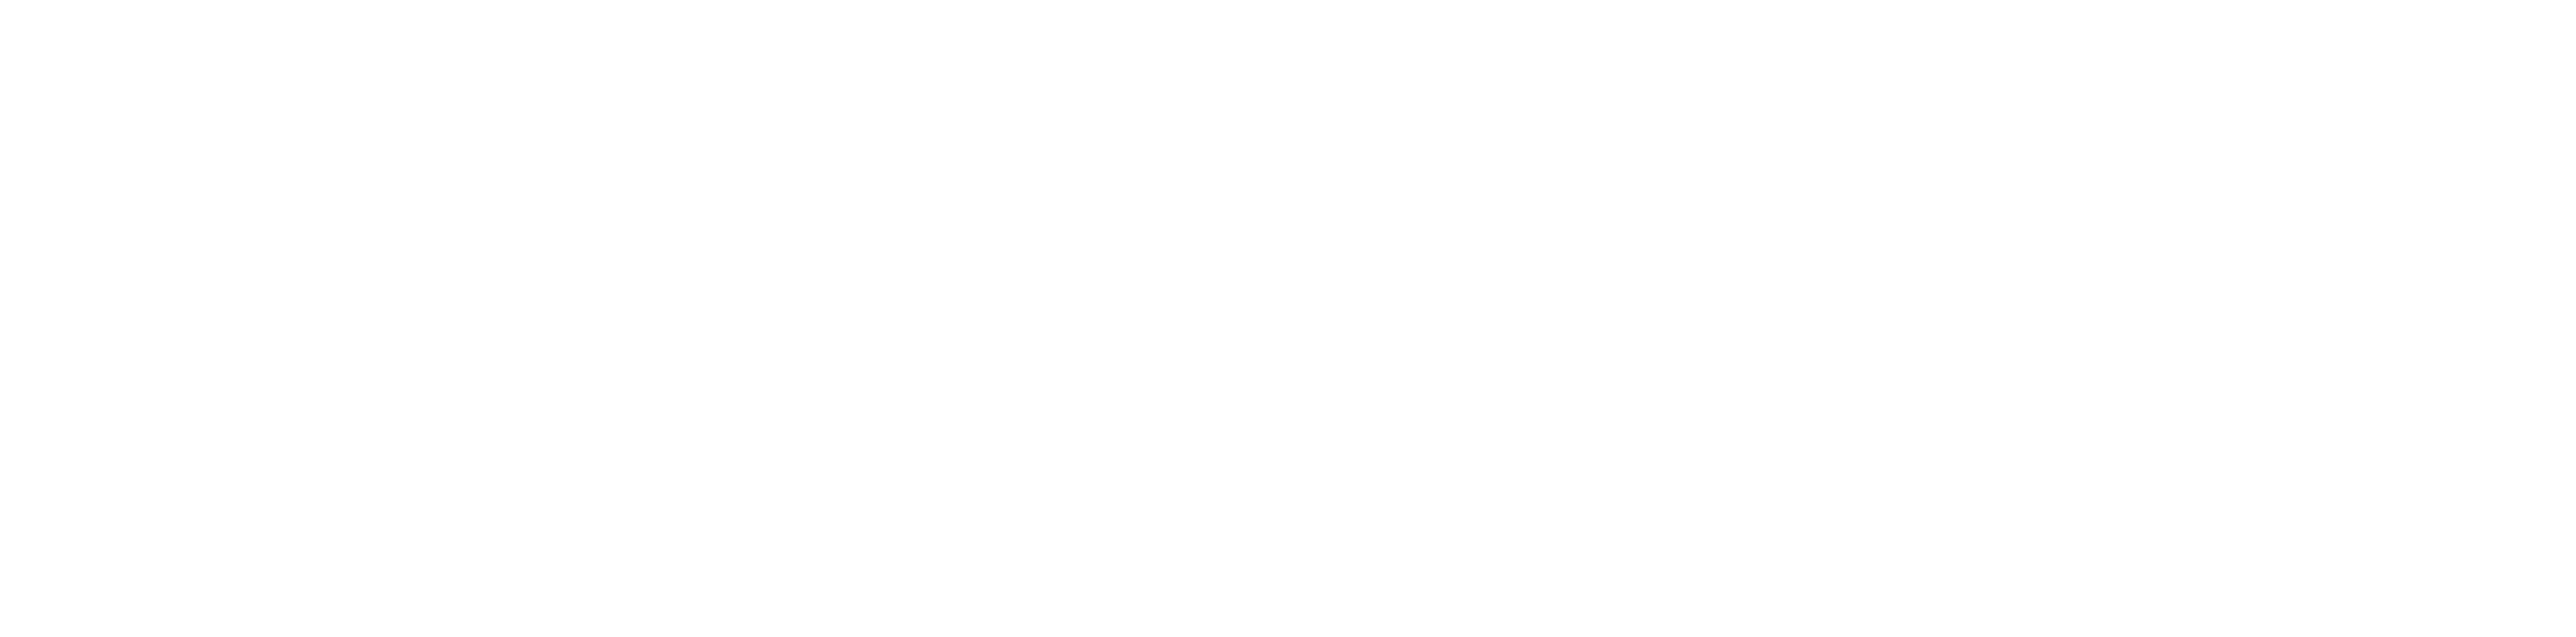 Repeat.GG logo